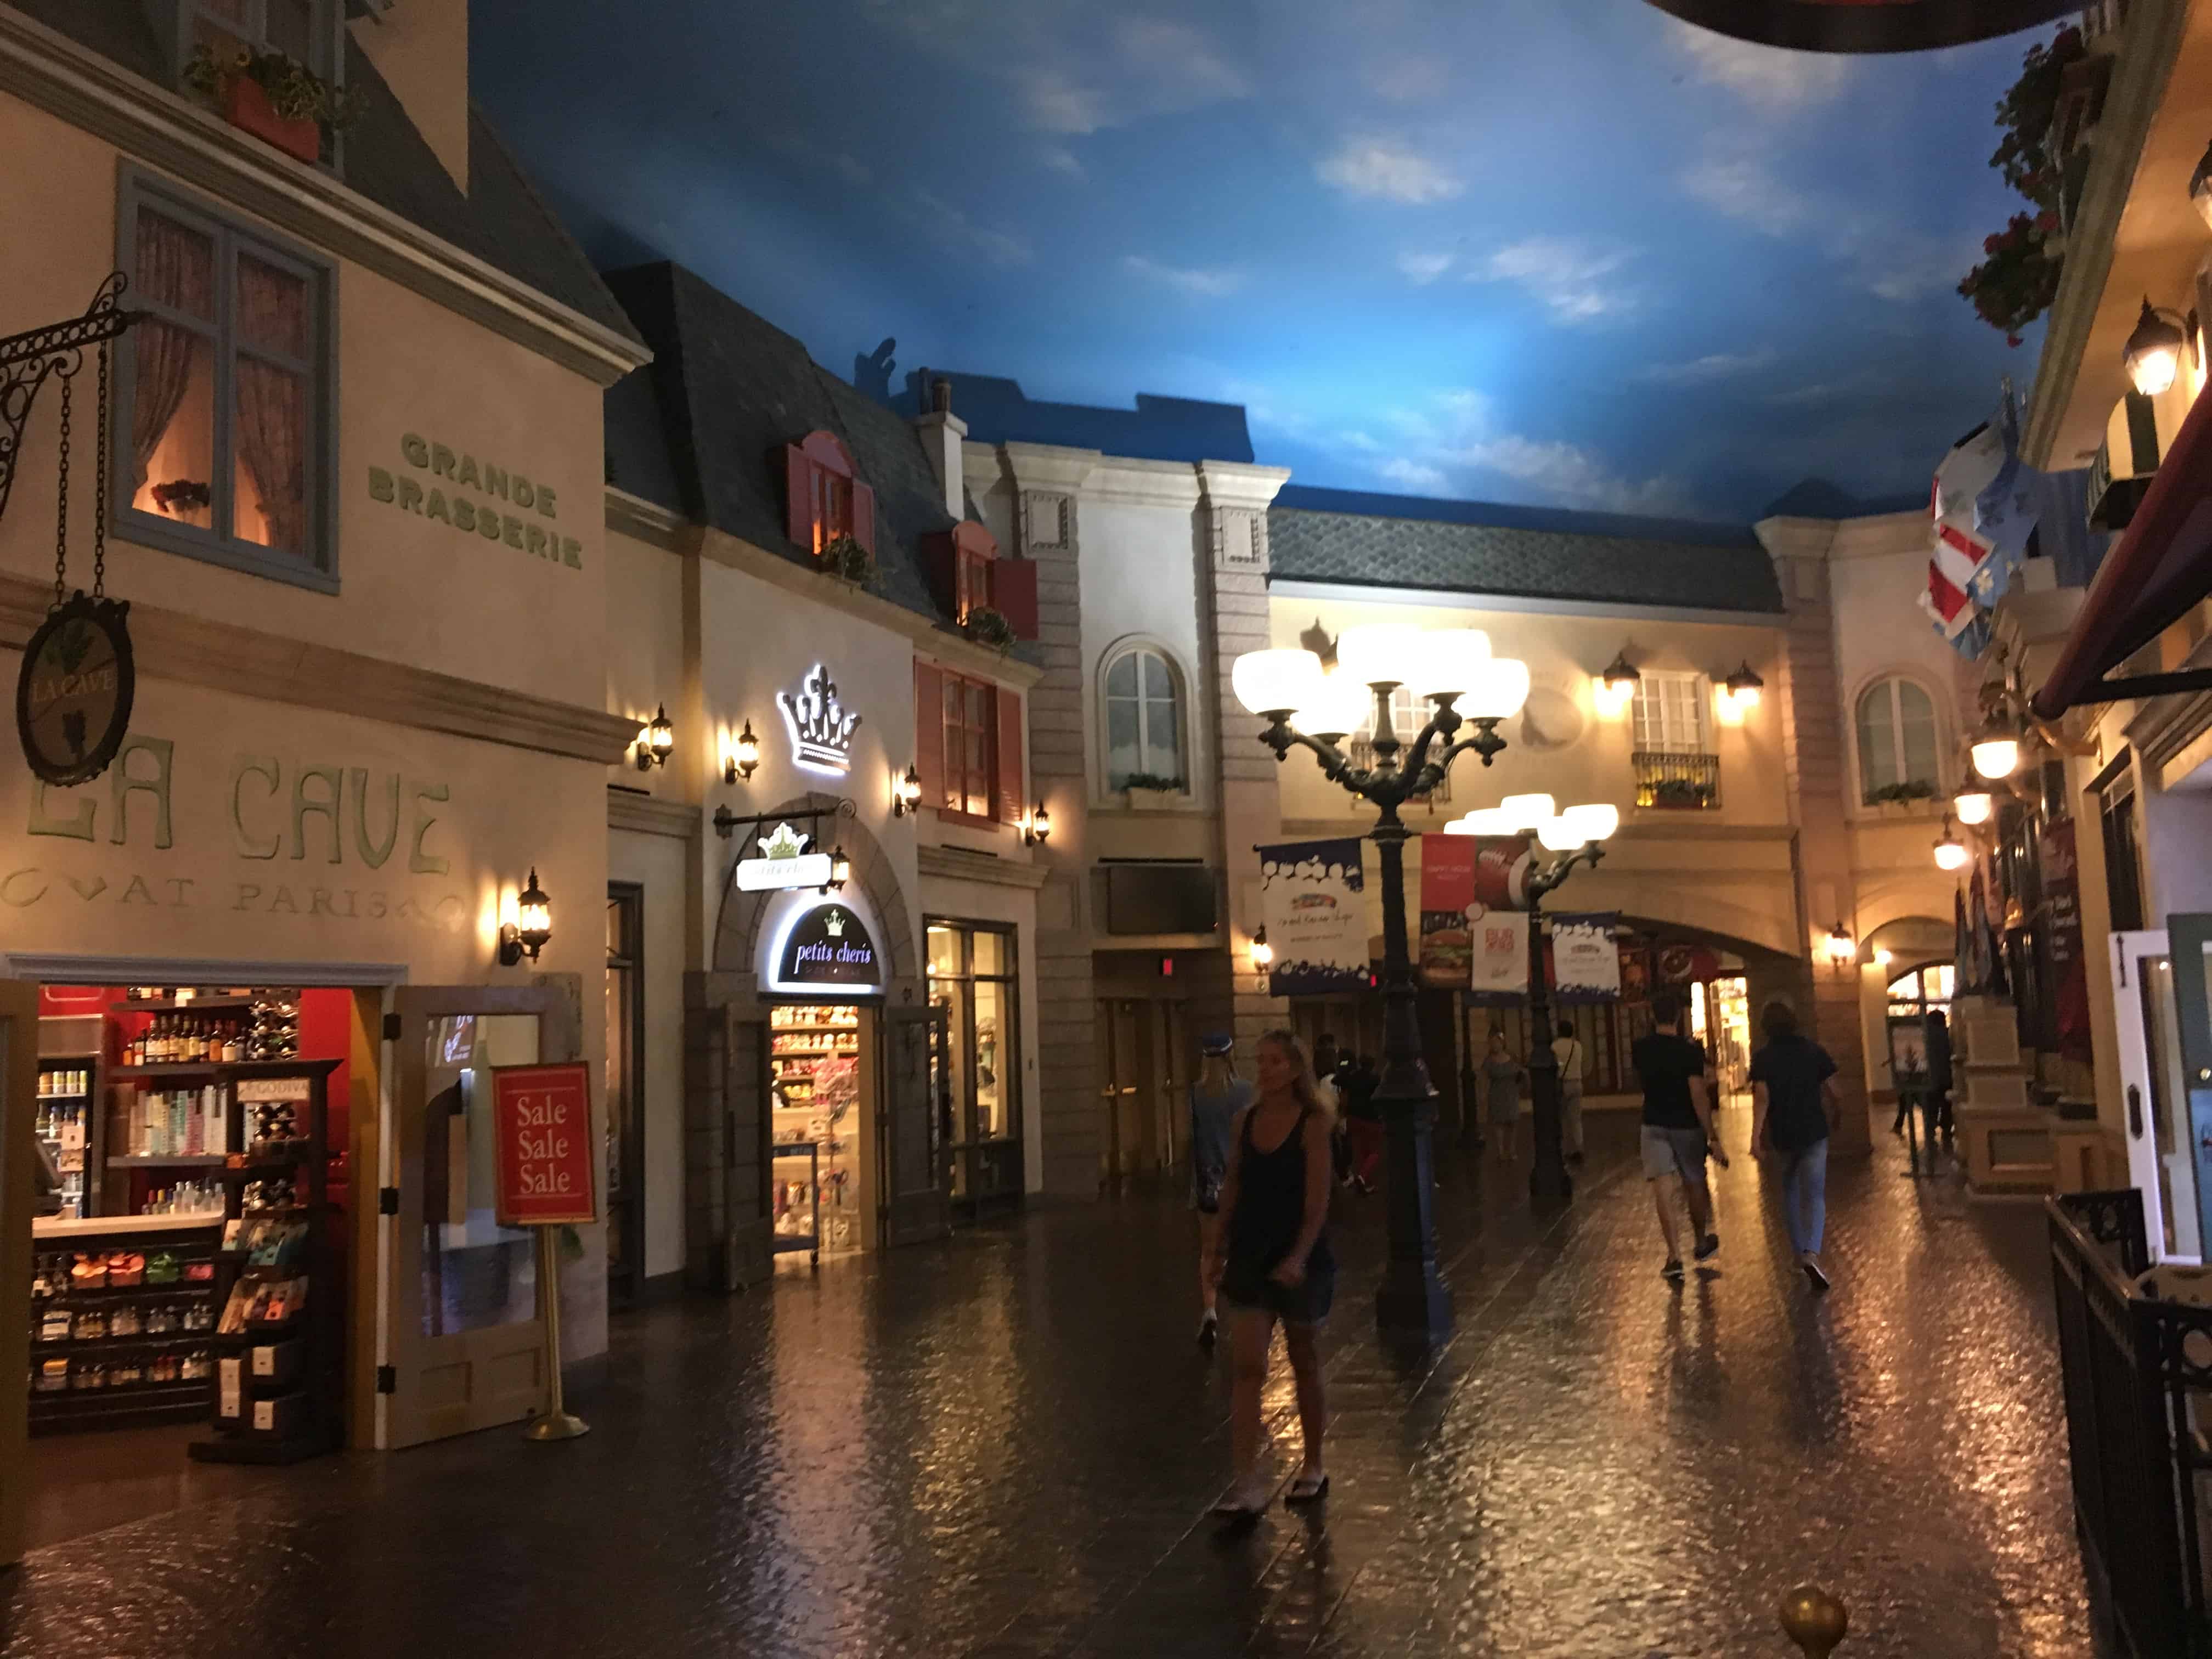 Shopping area at Paris Las Vegas